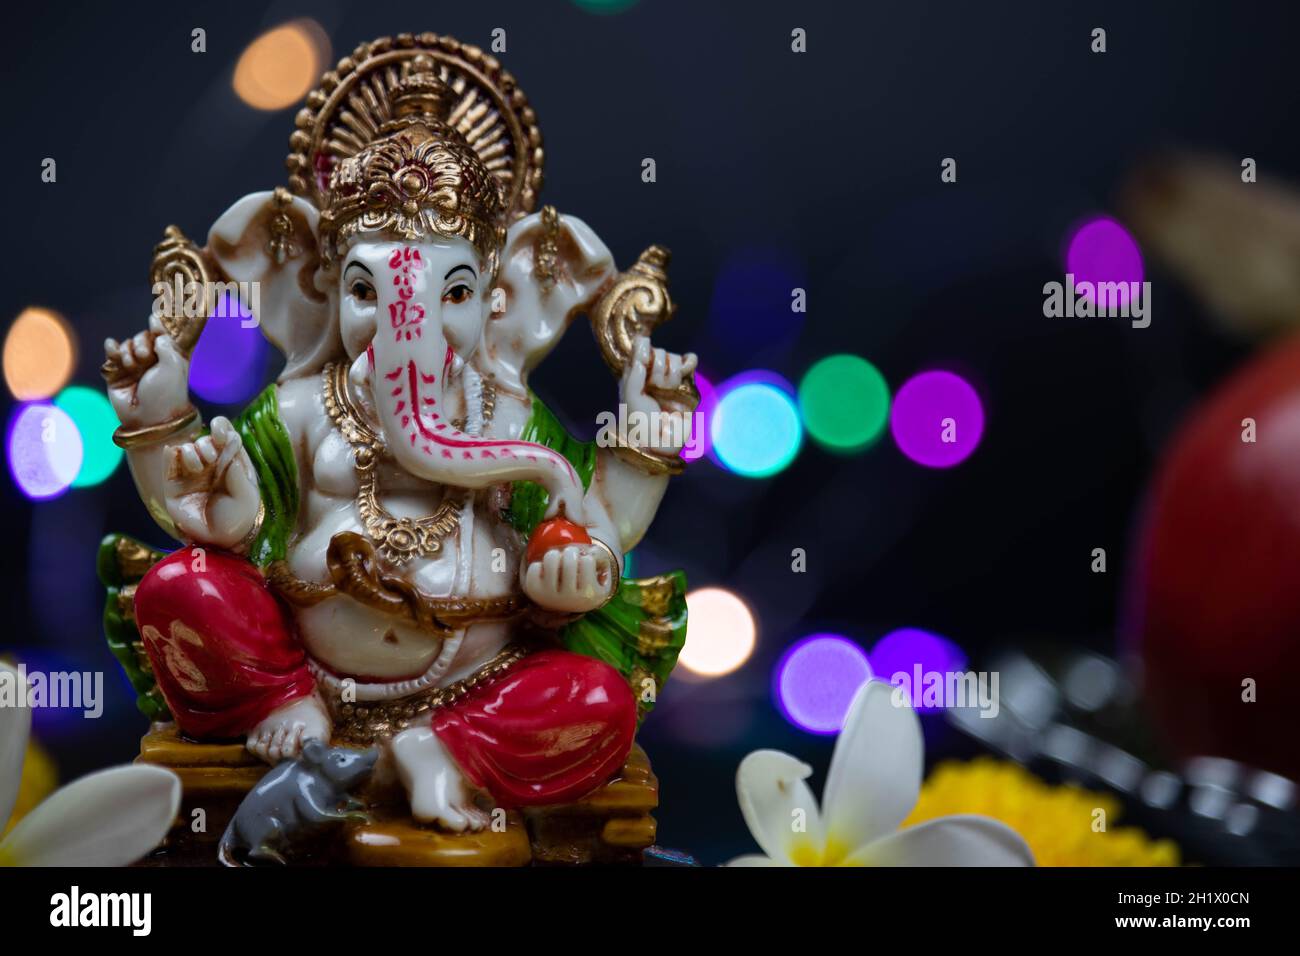 Closeup Of Hindu God Ganesha Ganpati Bappa Morya In Sitting Pose On A  Colorful Bokeh Effect Black Background. For Prayers On Diwali Puja New Year  Deep Stock Photo - Alamy